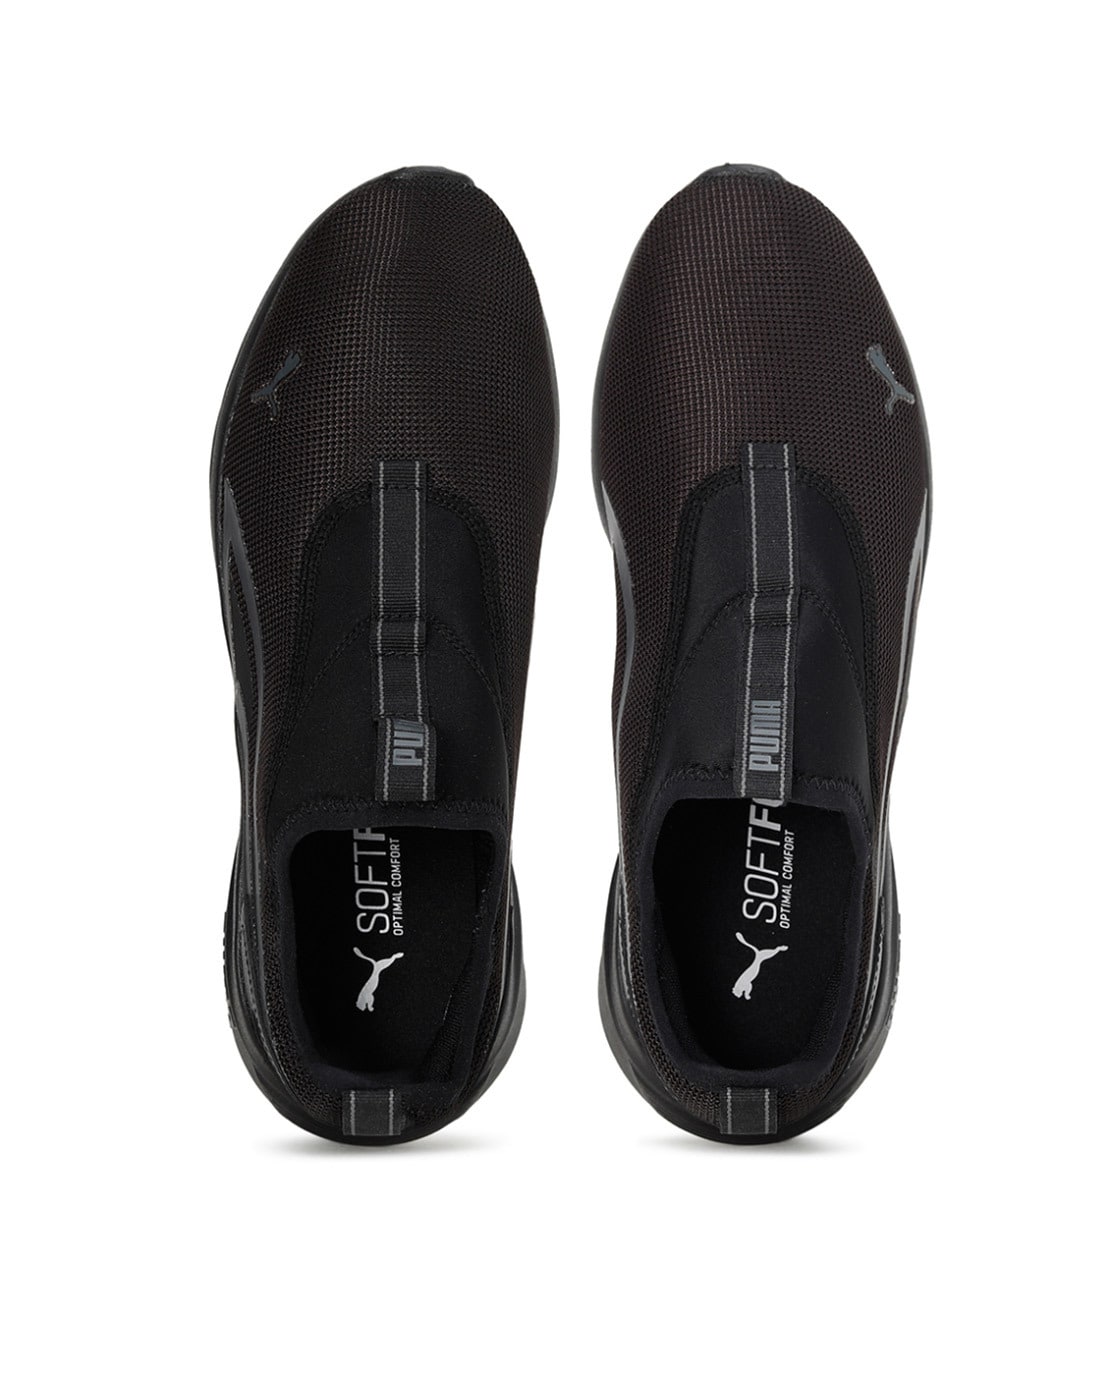 PUMA Tiguan Men's Slip-On Shoes | PUMA